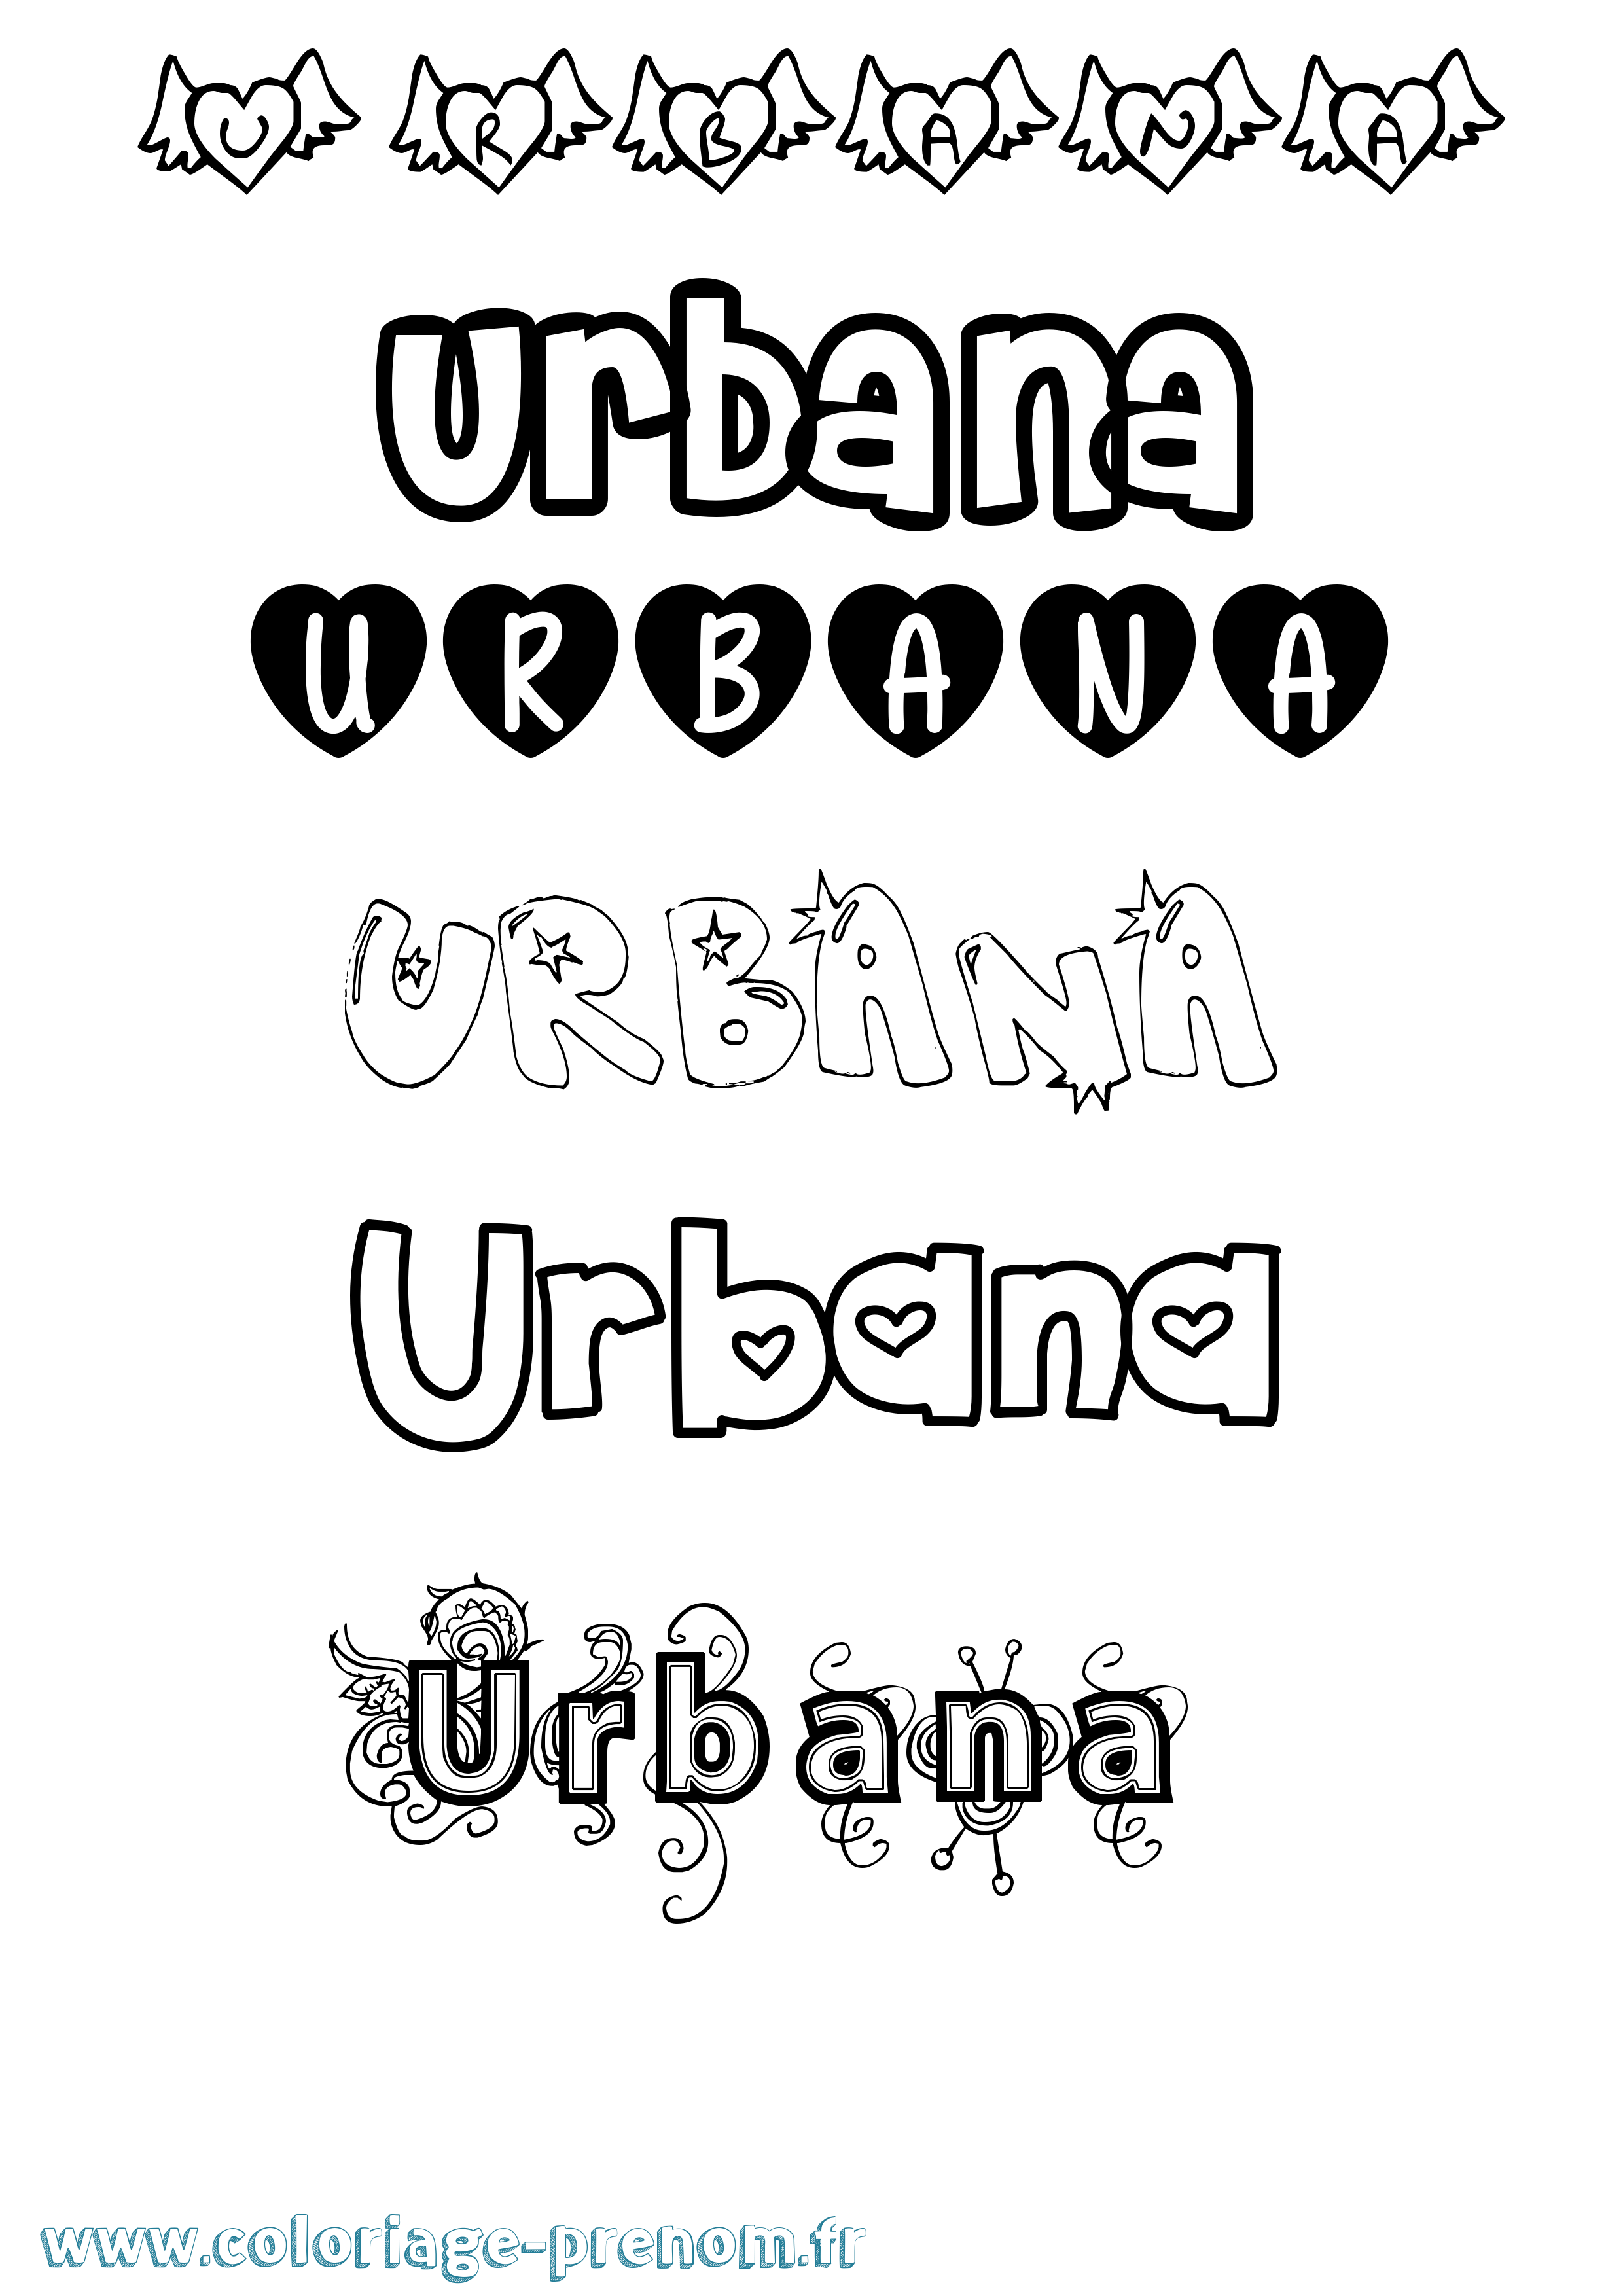 Coloriage prénom Urbana Girly